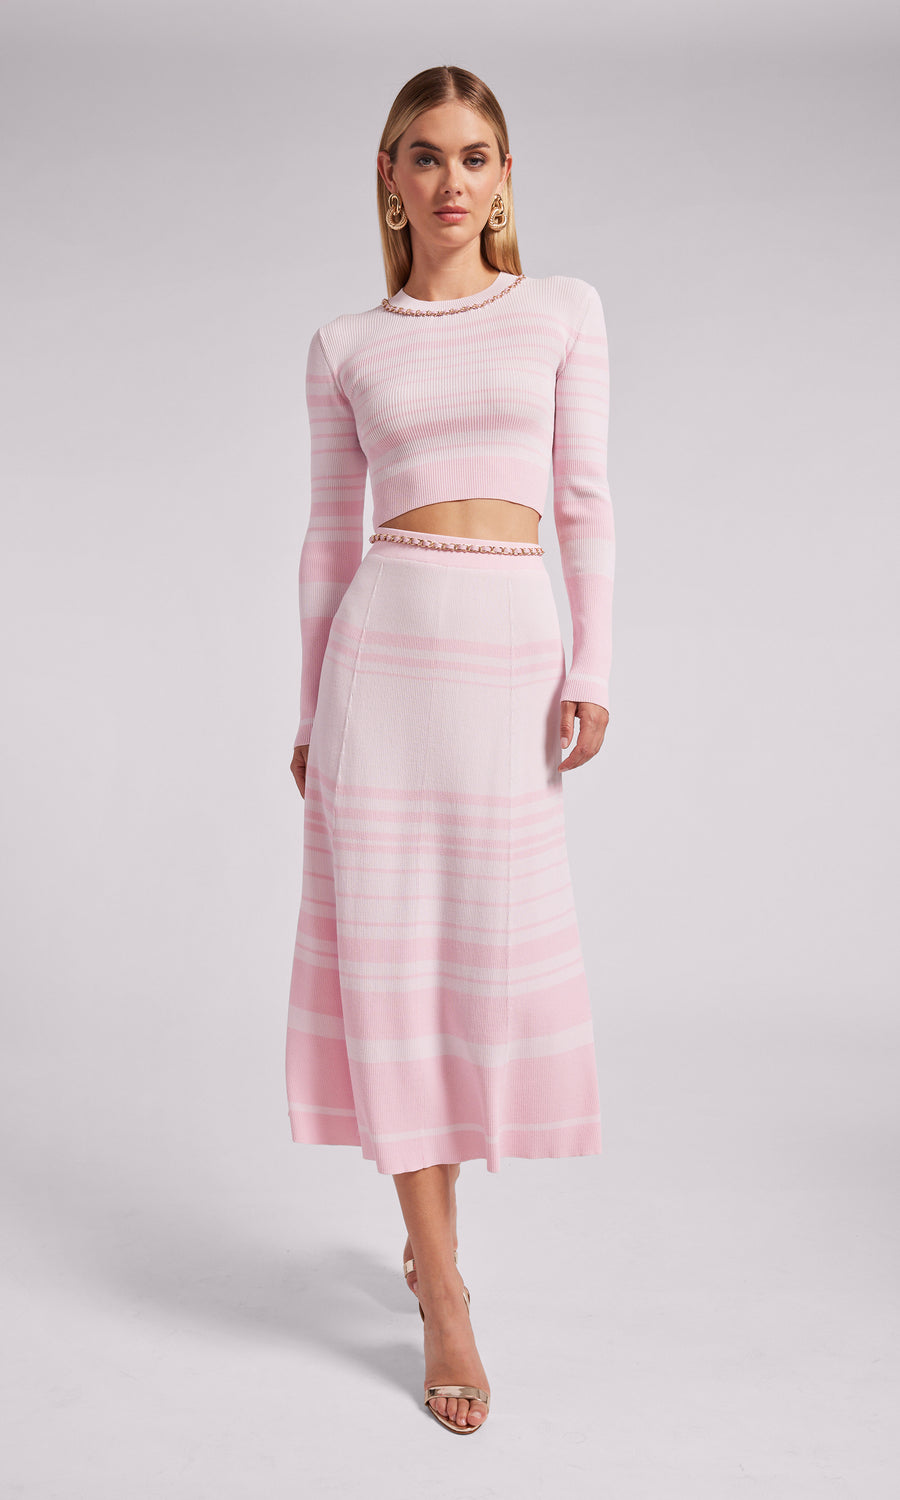 Tiana Skirt - Pink Stripe